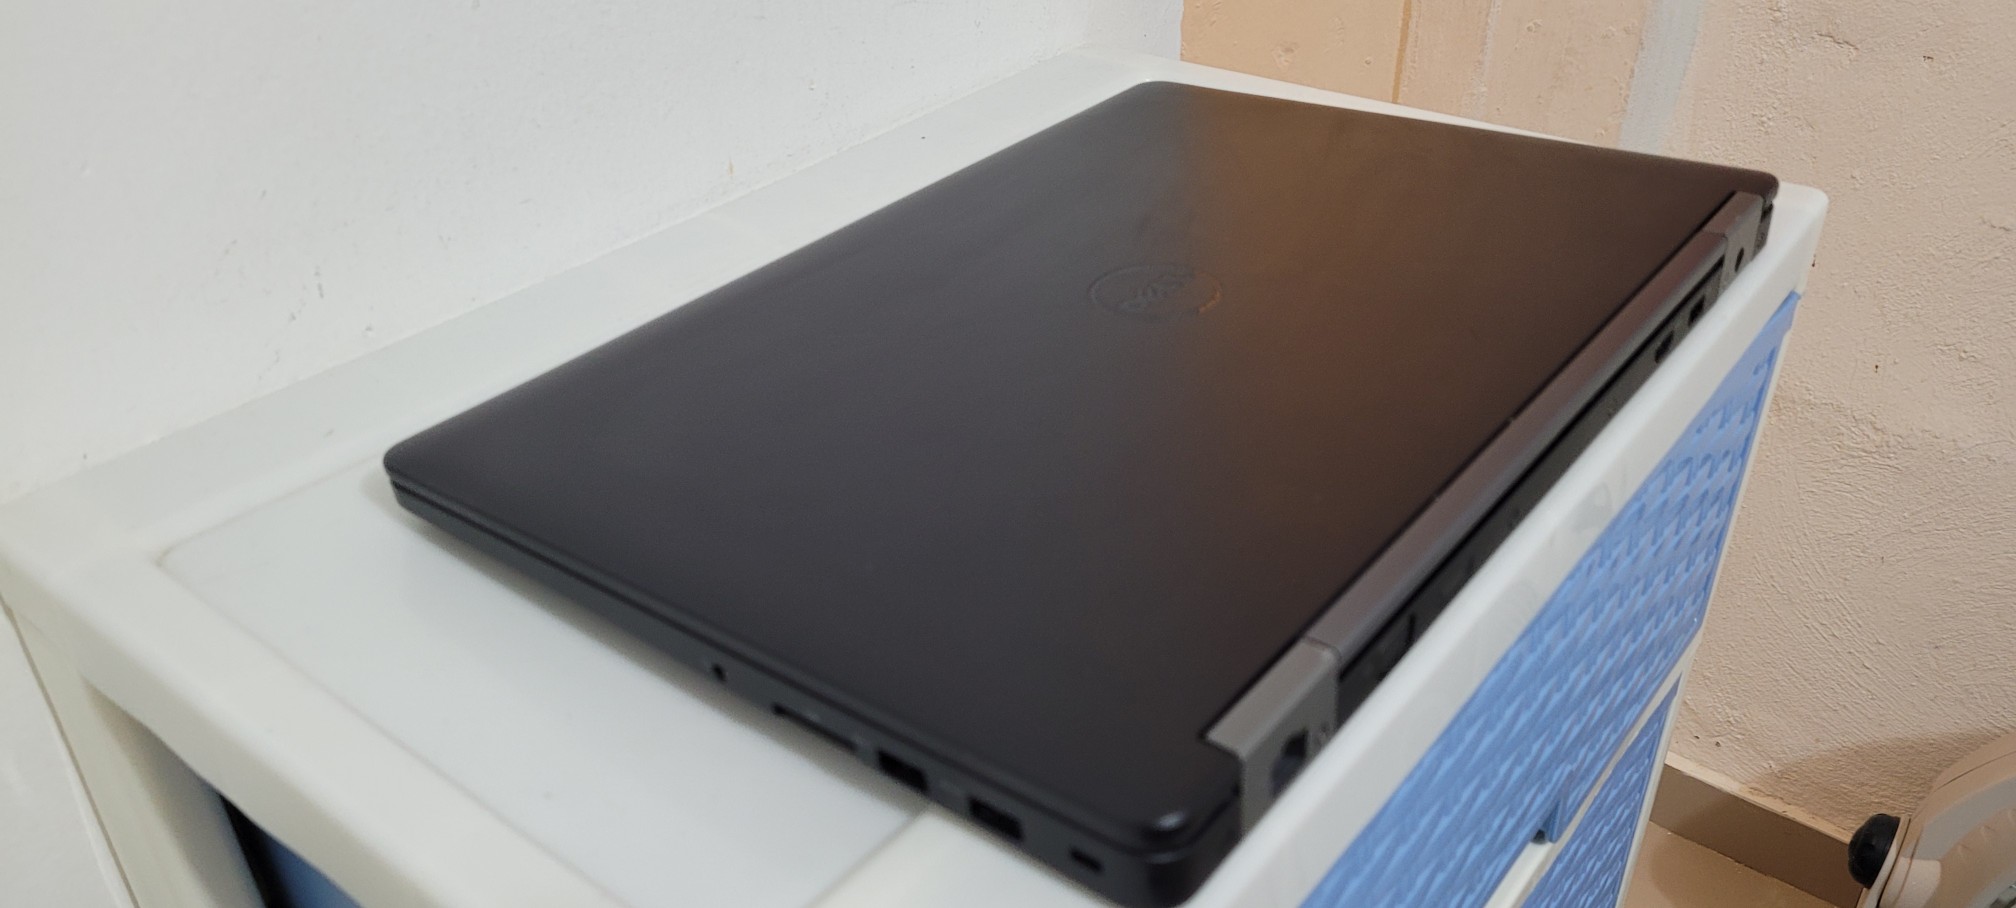 computadoras y laptops - laptop Dell Slim 14 Pulg Core i7 6ta Gen Ram 16gb ddr4 Disco 256gb SSD Video 8gb 2